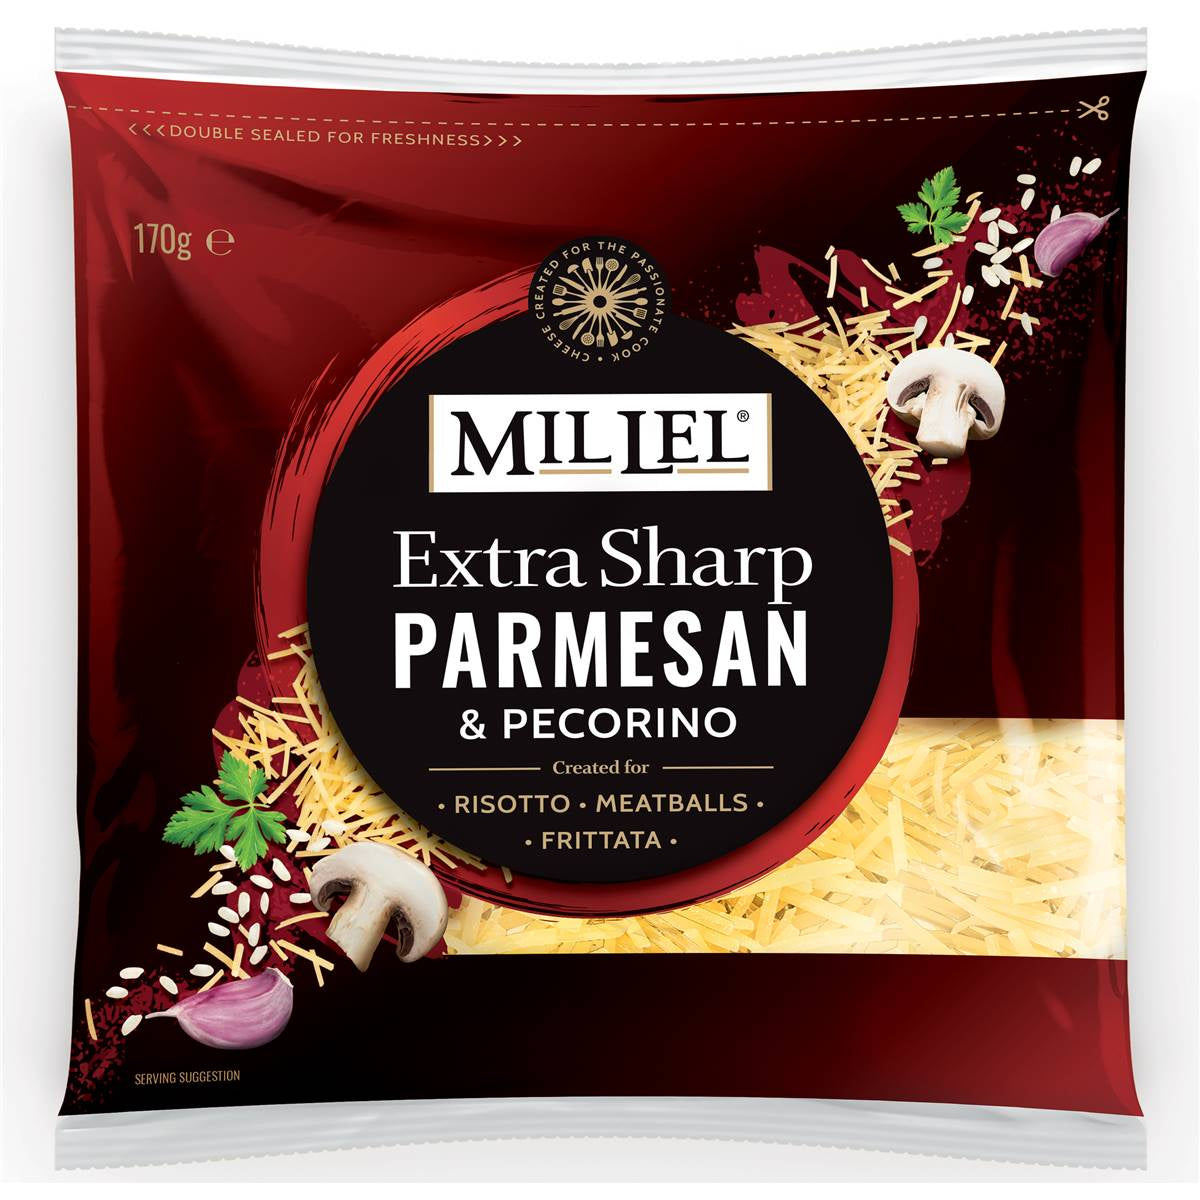 Mil Lel Parmesan & Pecorino Extra Sharp Shredded Cheese  170g